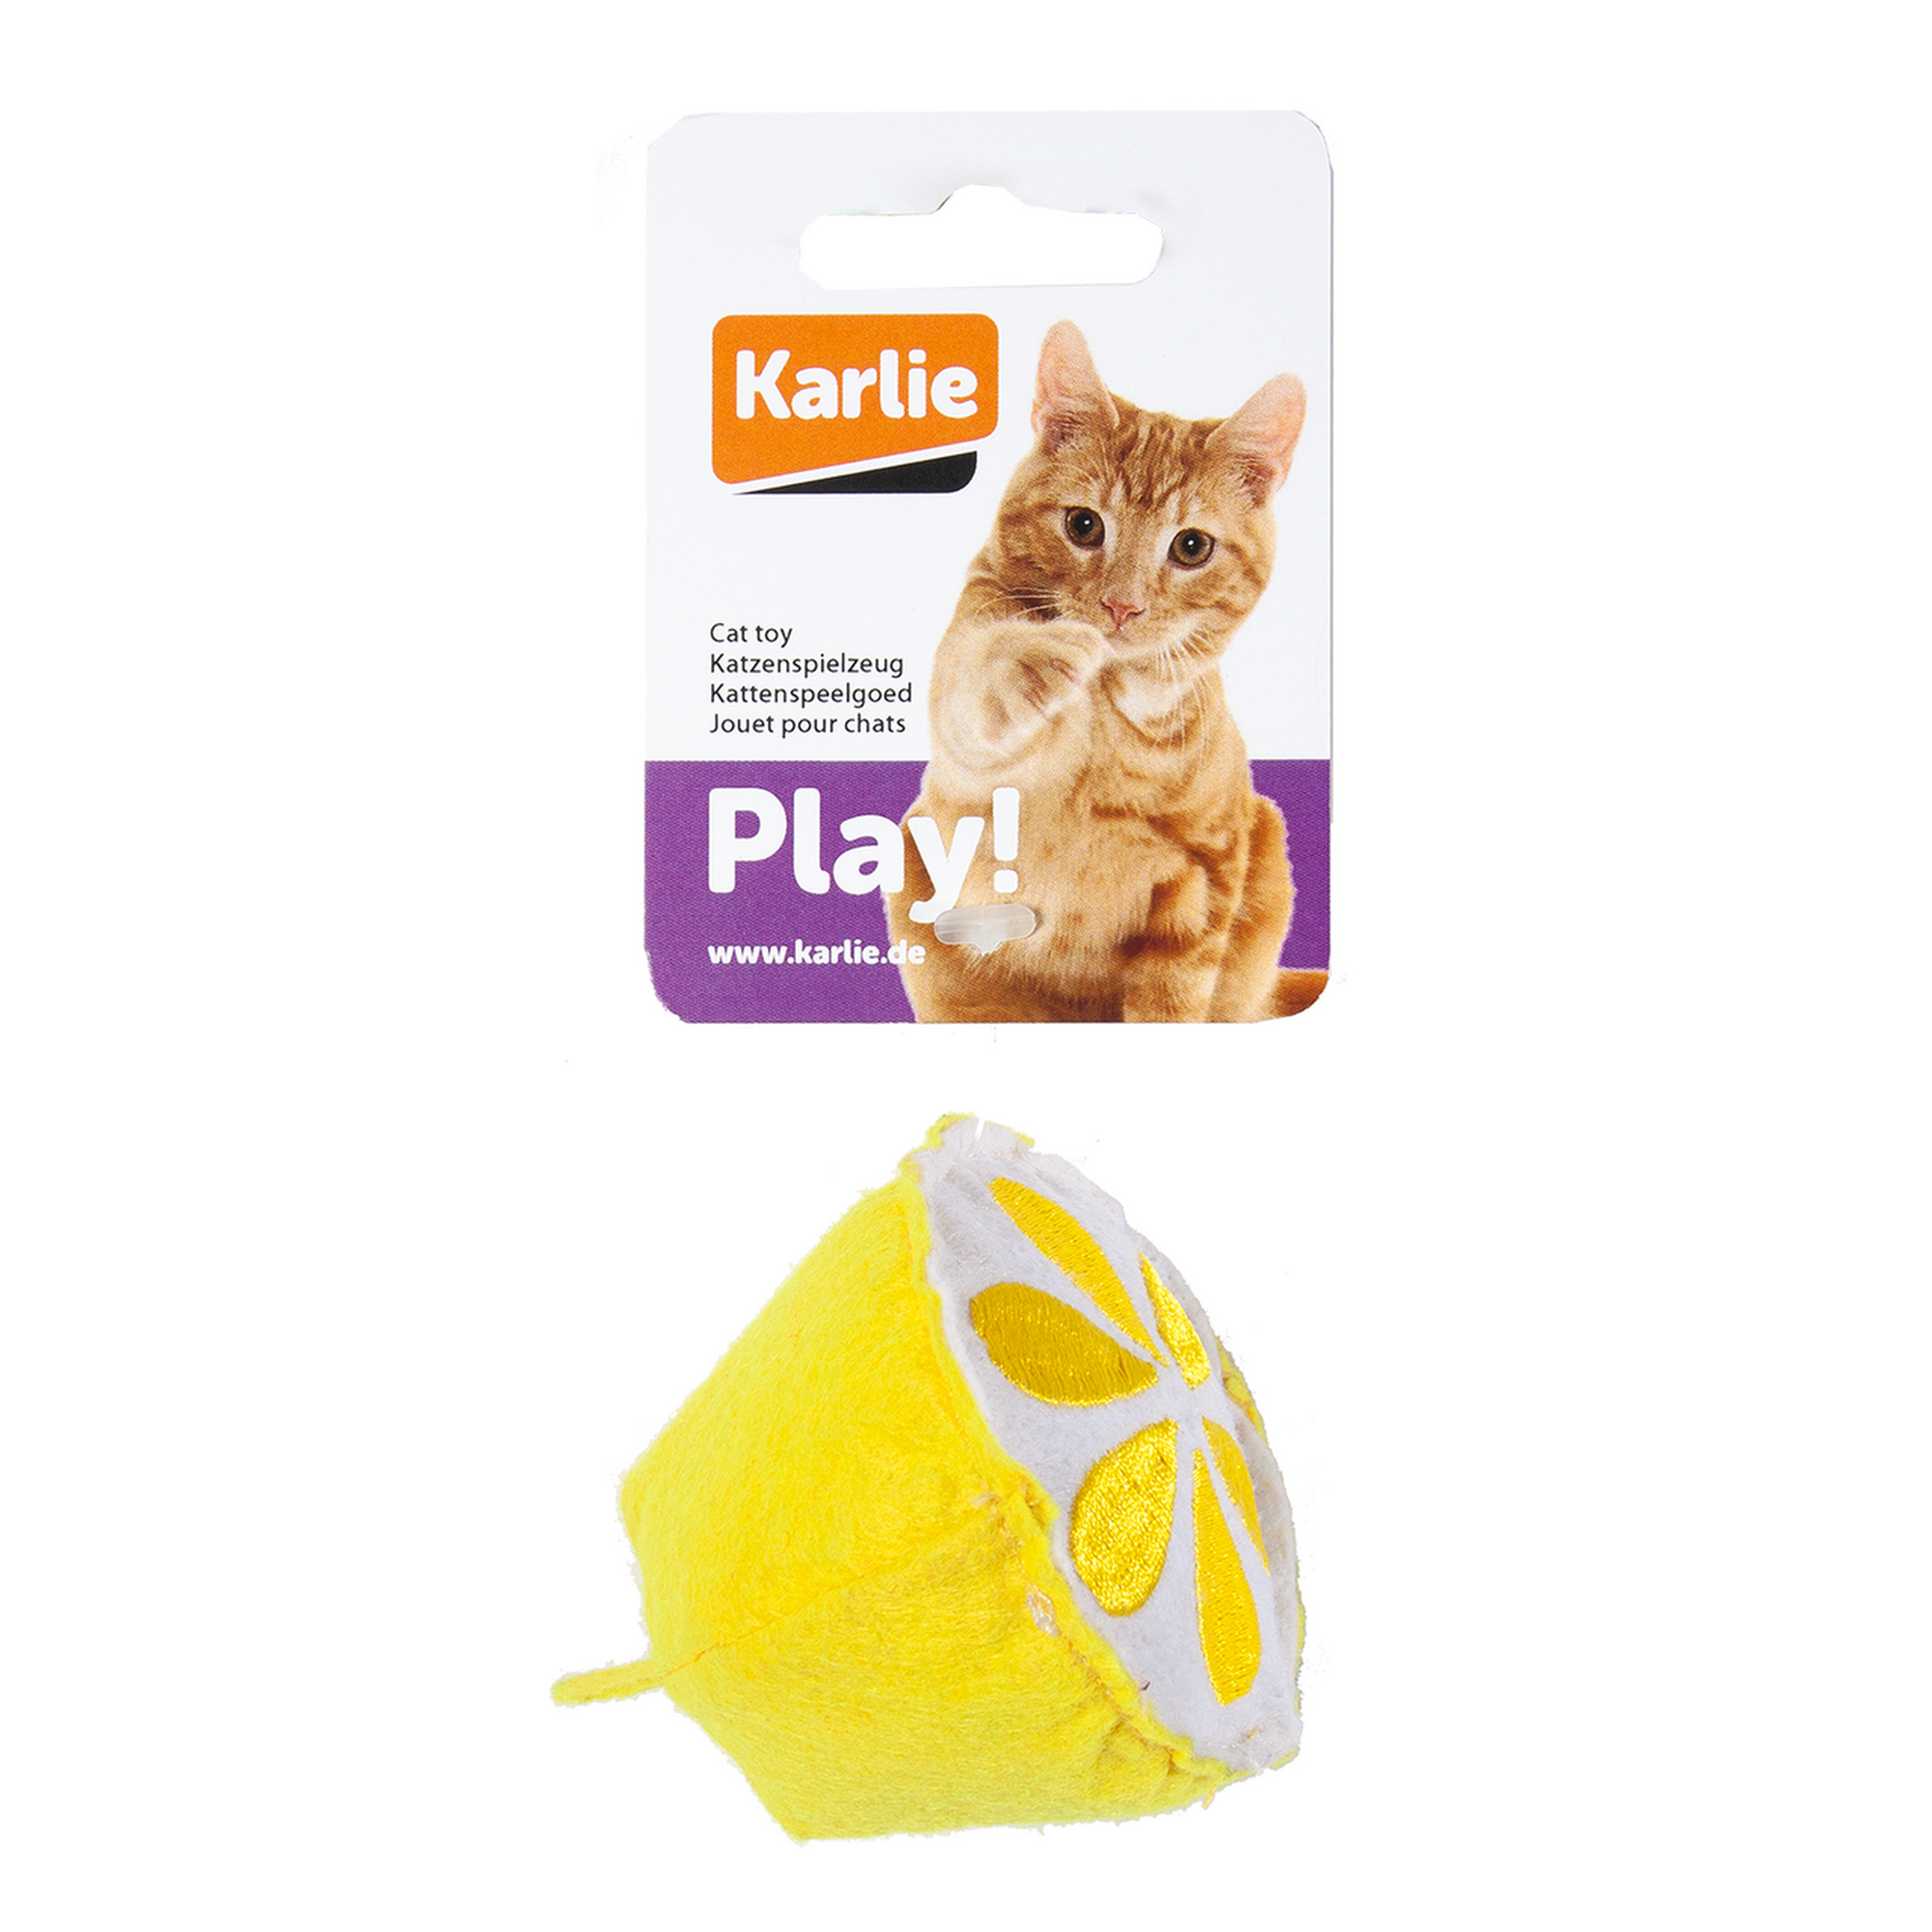 Katzenspielzeug Texil Limone gelb mit Catnip 6 cm + product picture